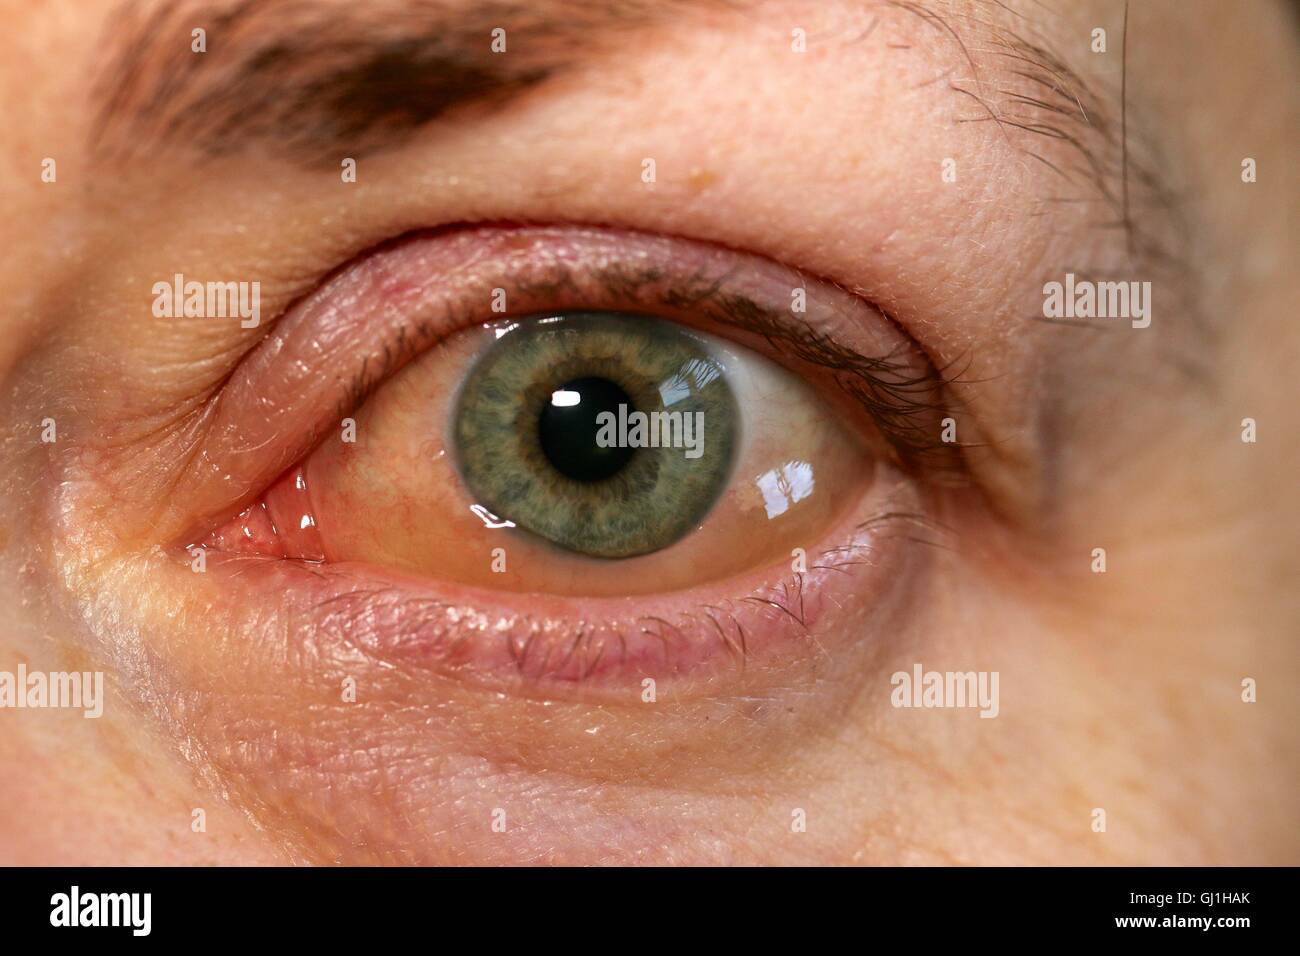 Left eye with irritation or allergic reaction. Stock Photo